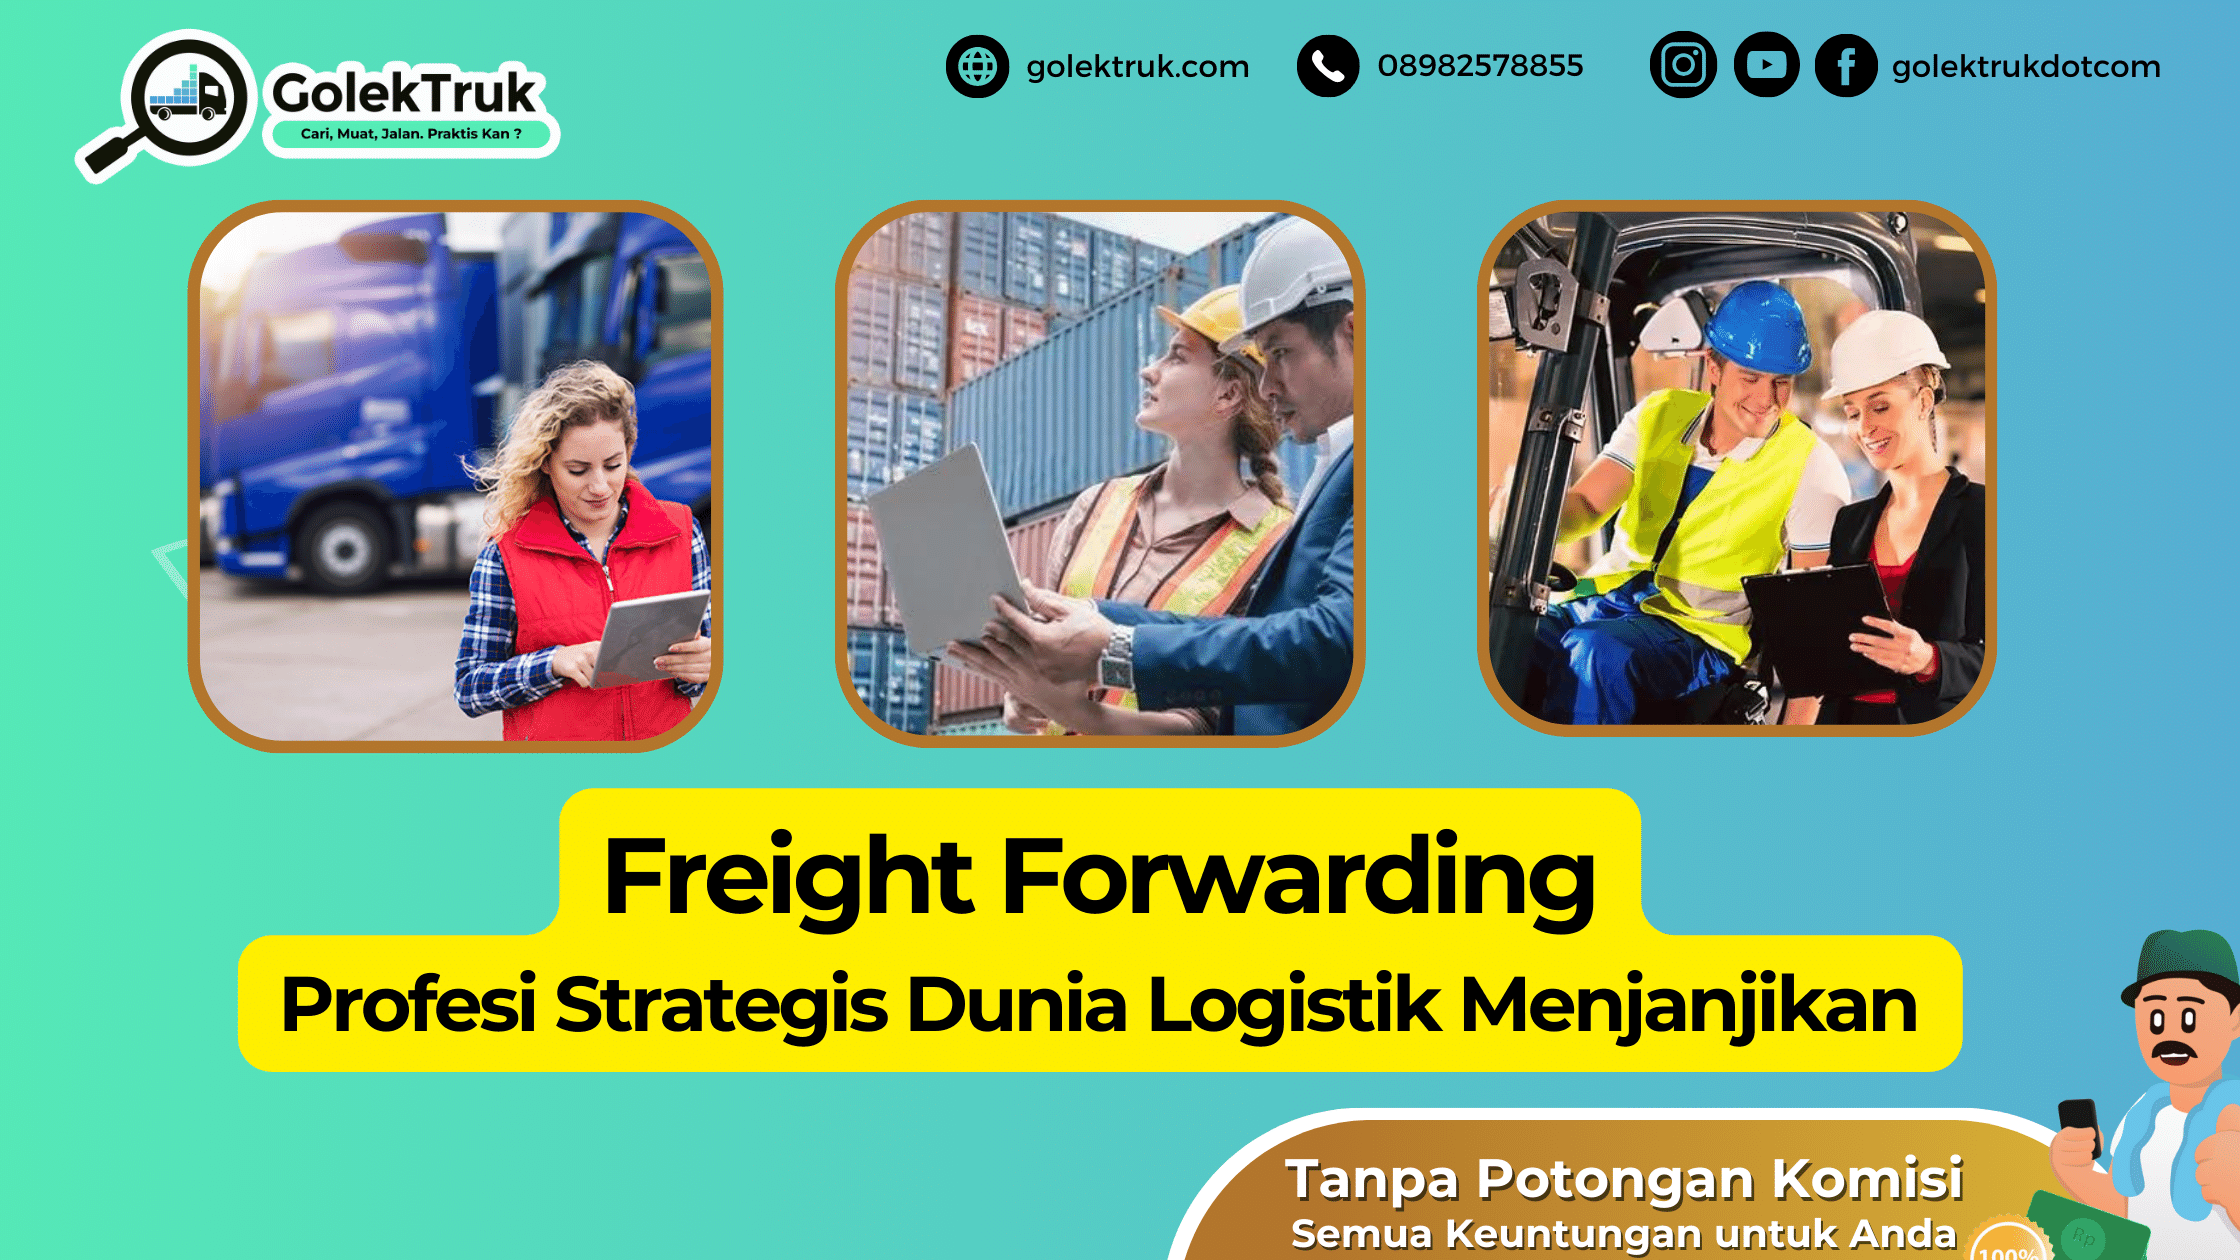 Freight Forwarding: Profesi Strategis Dunia Logistik Menjanjikan